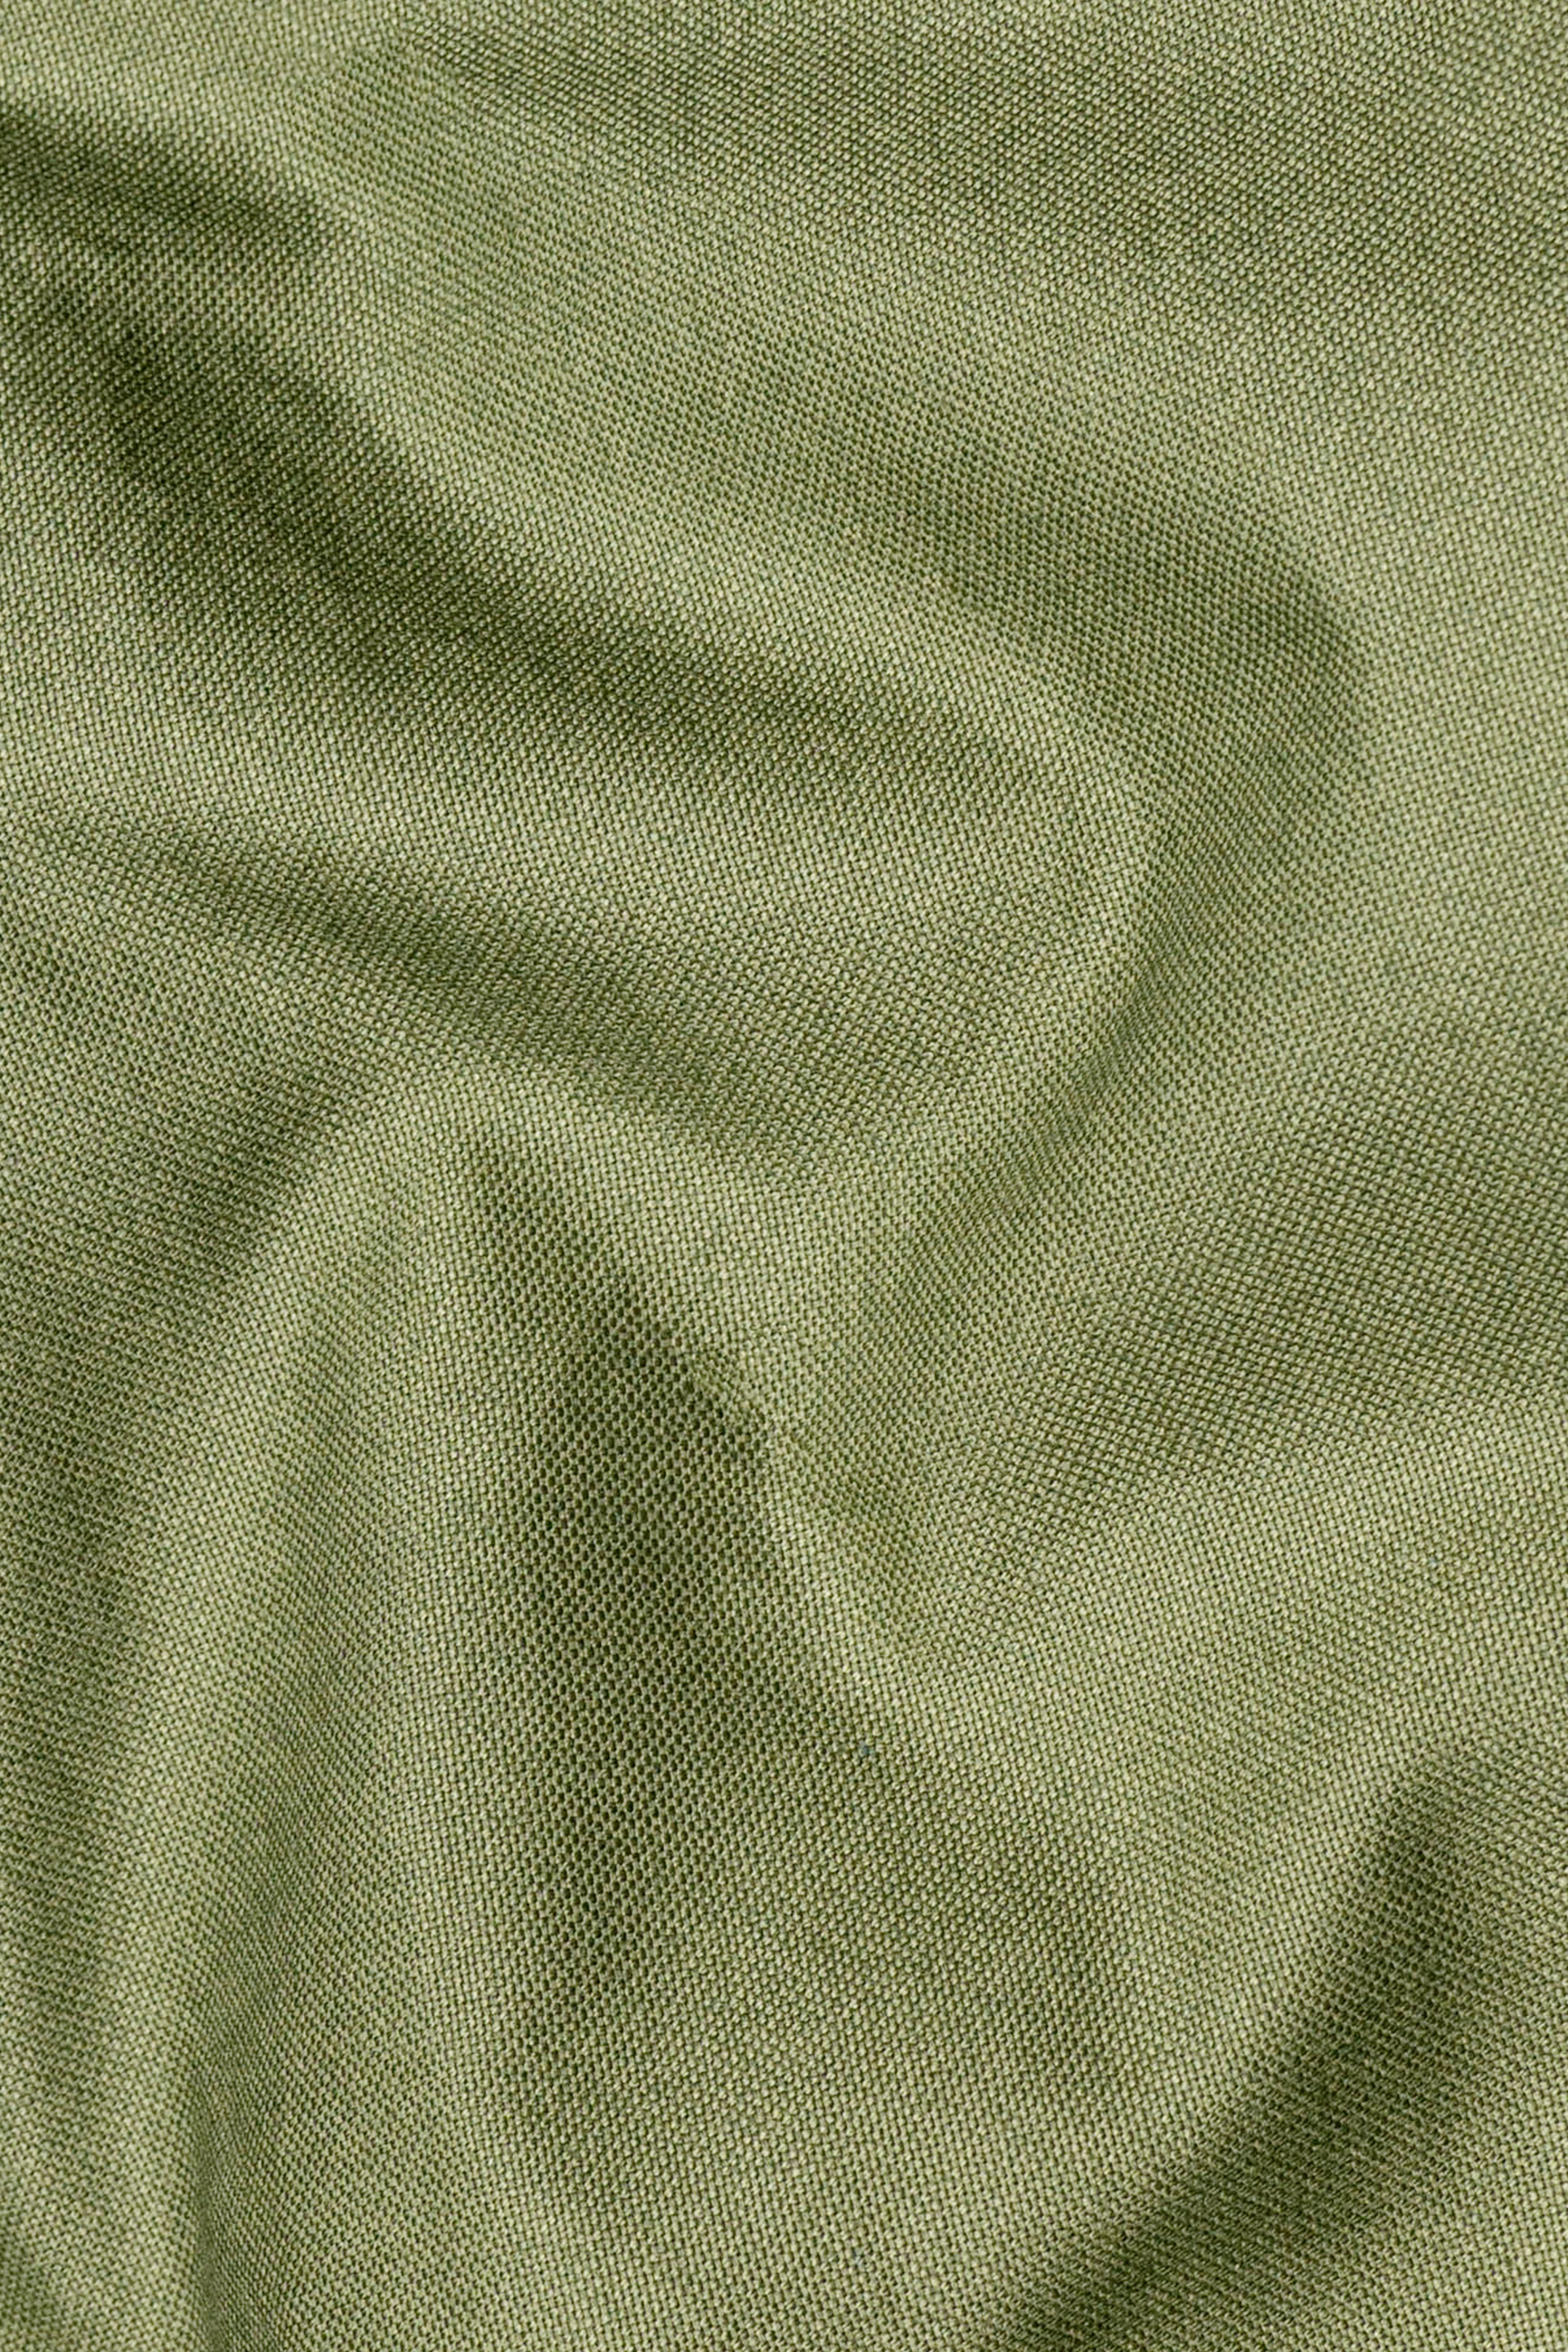 Verdigris Green Royal Oxford Shirt